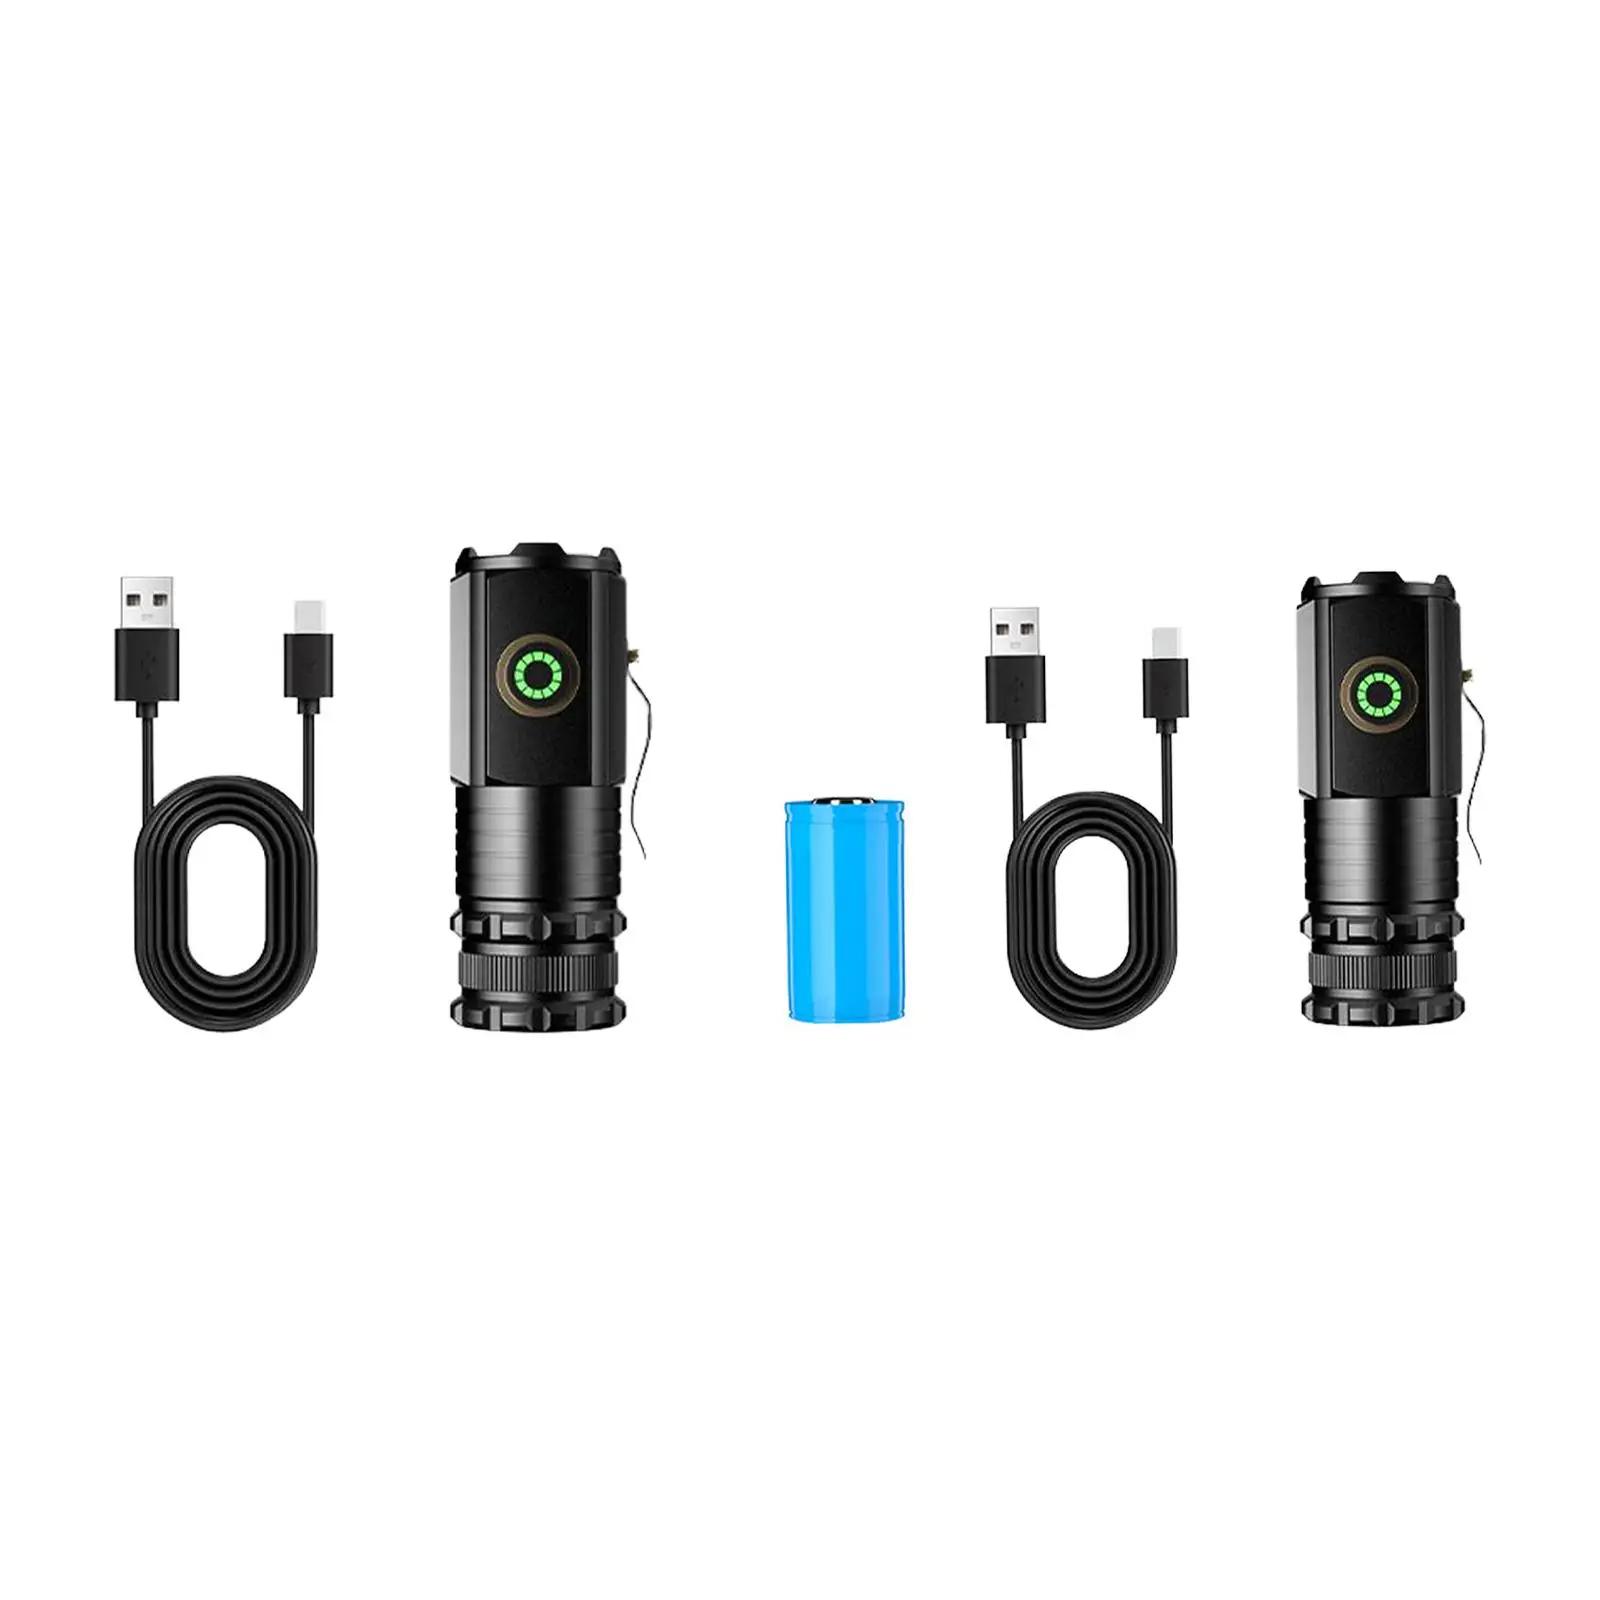 Portable flashlights 5 Modes Handheld Torch Lights for Garden Outdoor Hiking